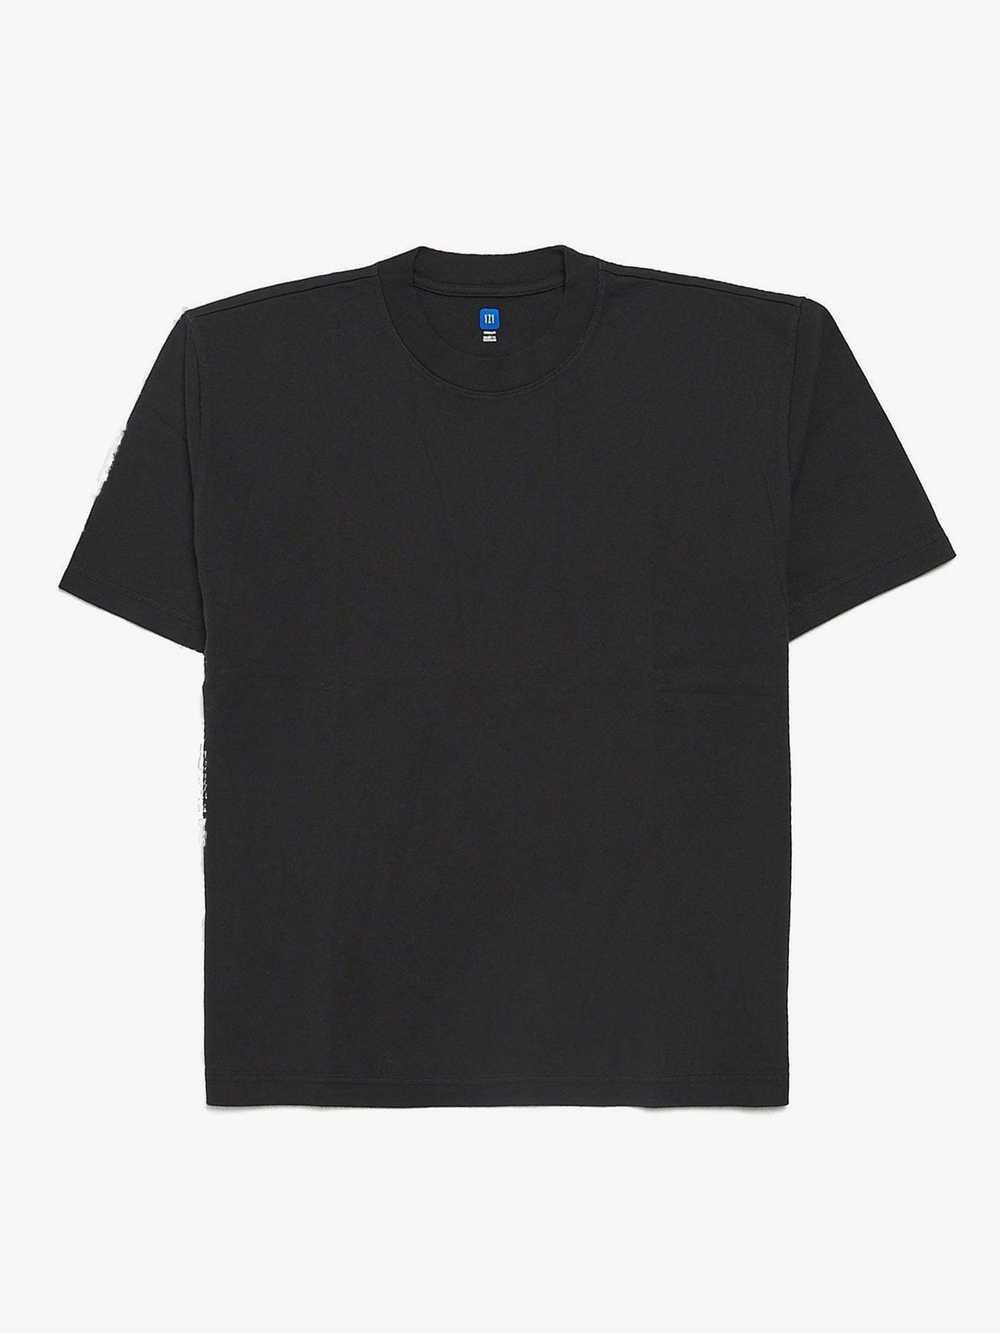 Yeezy Season Black Oversized T-Shirt - image 1